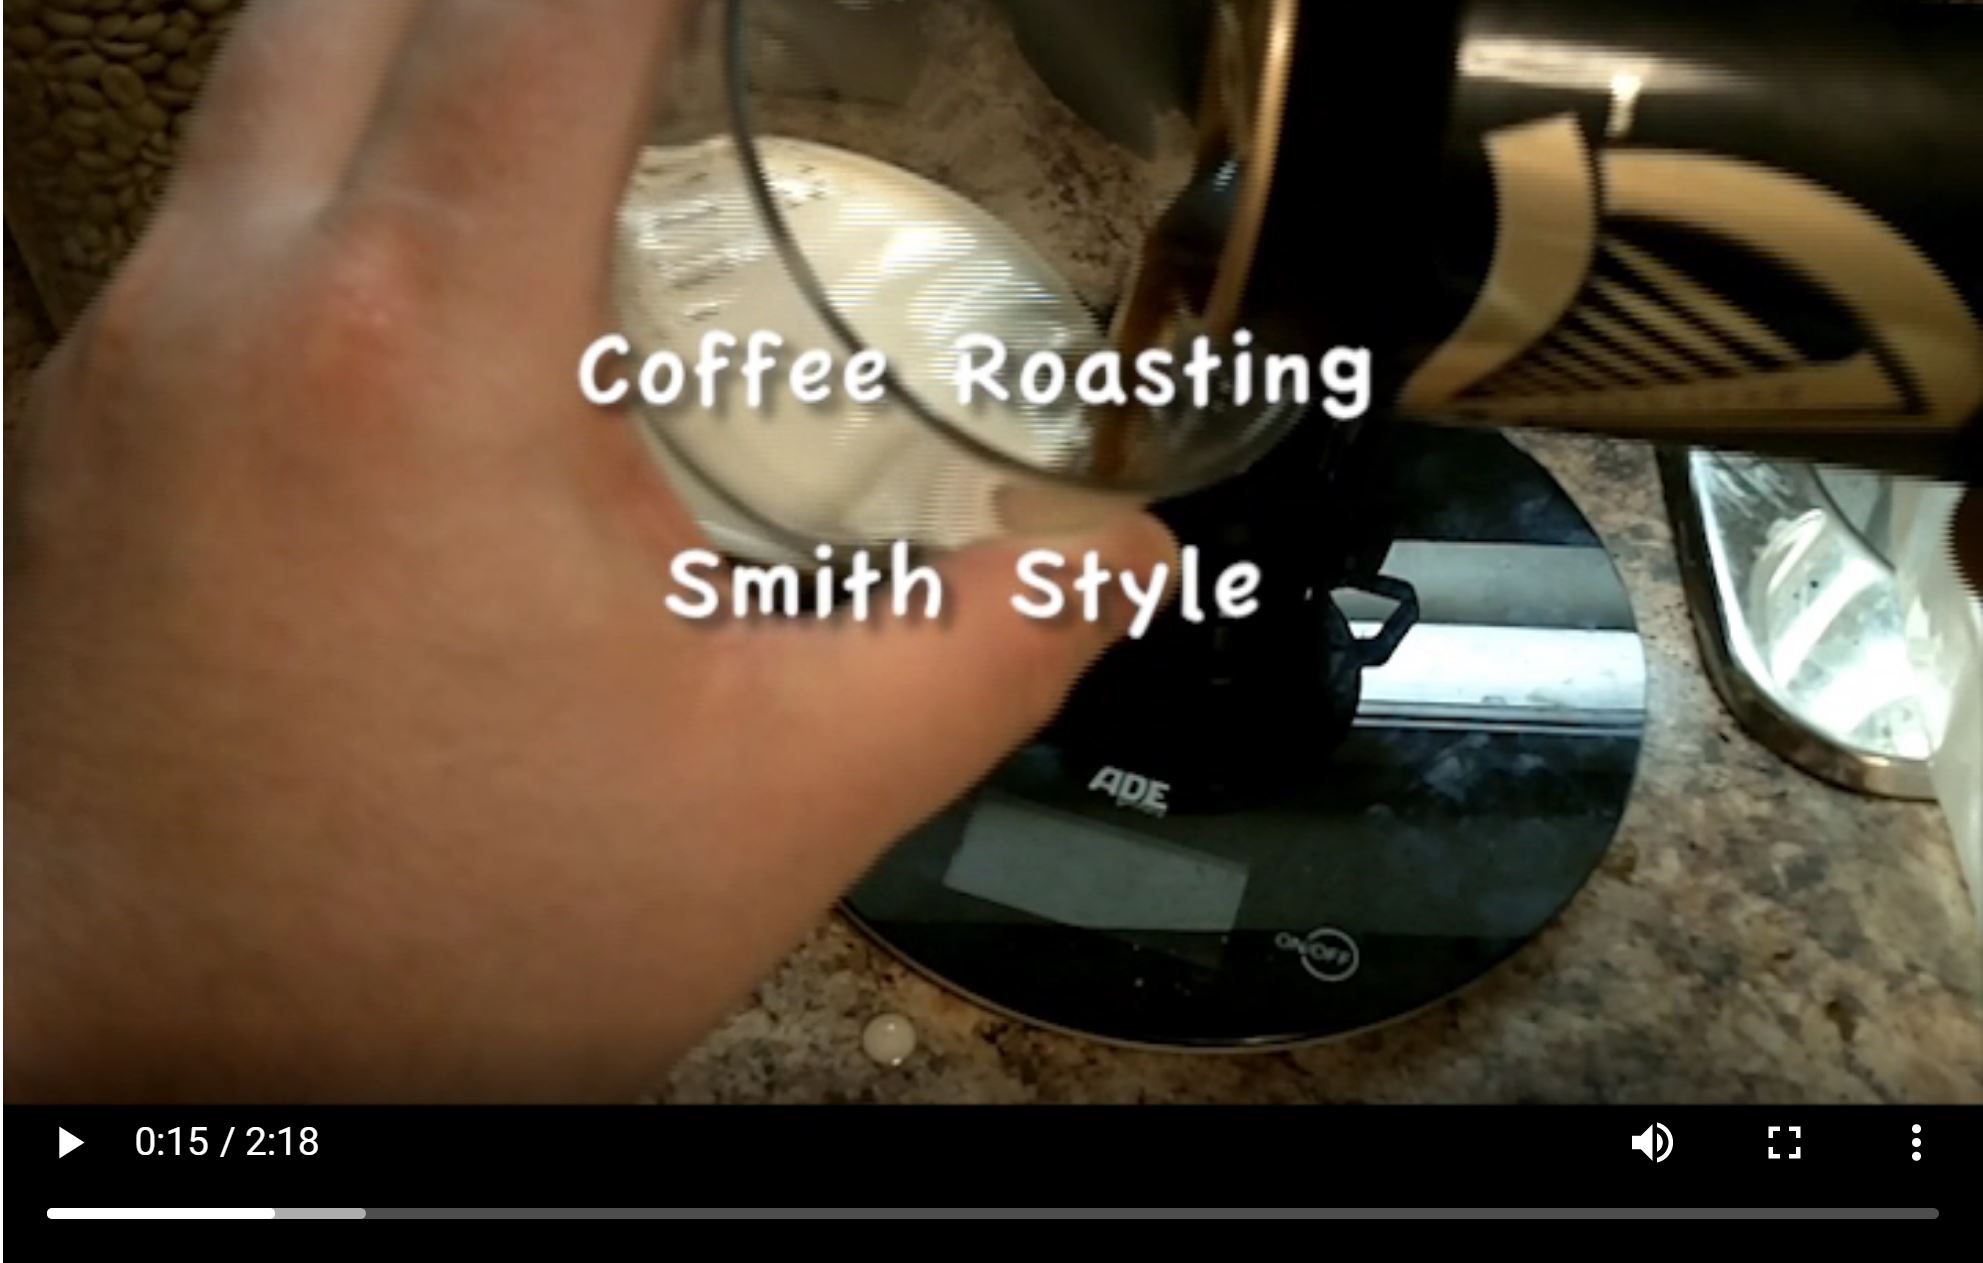 Coffee Roasting Smith Style